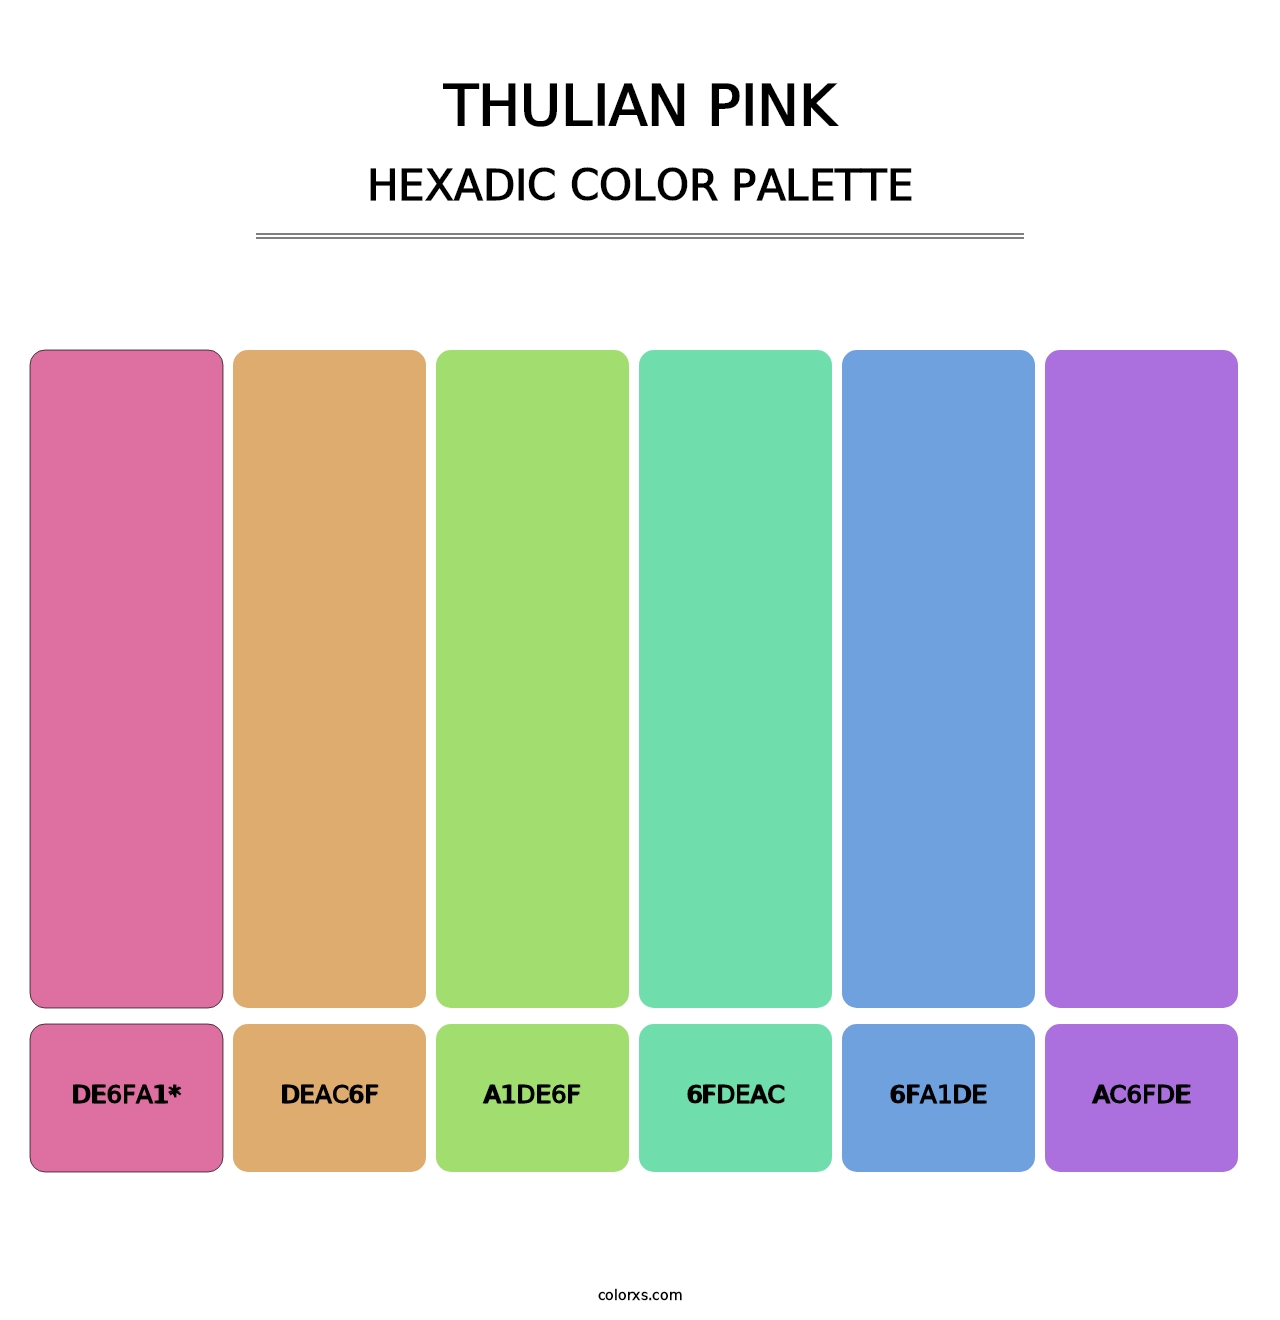 Thulian Pink - Hexadic Color Palette